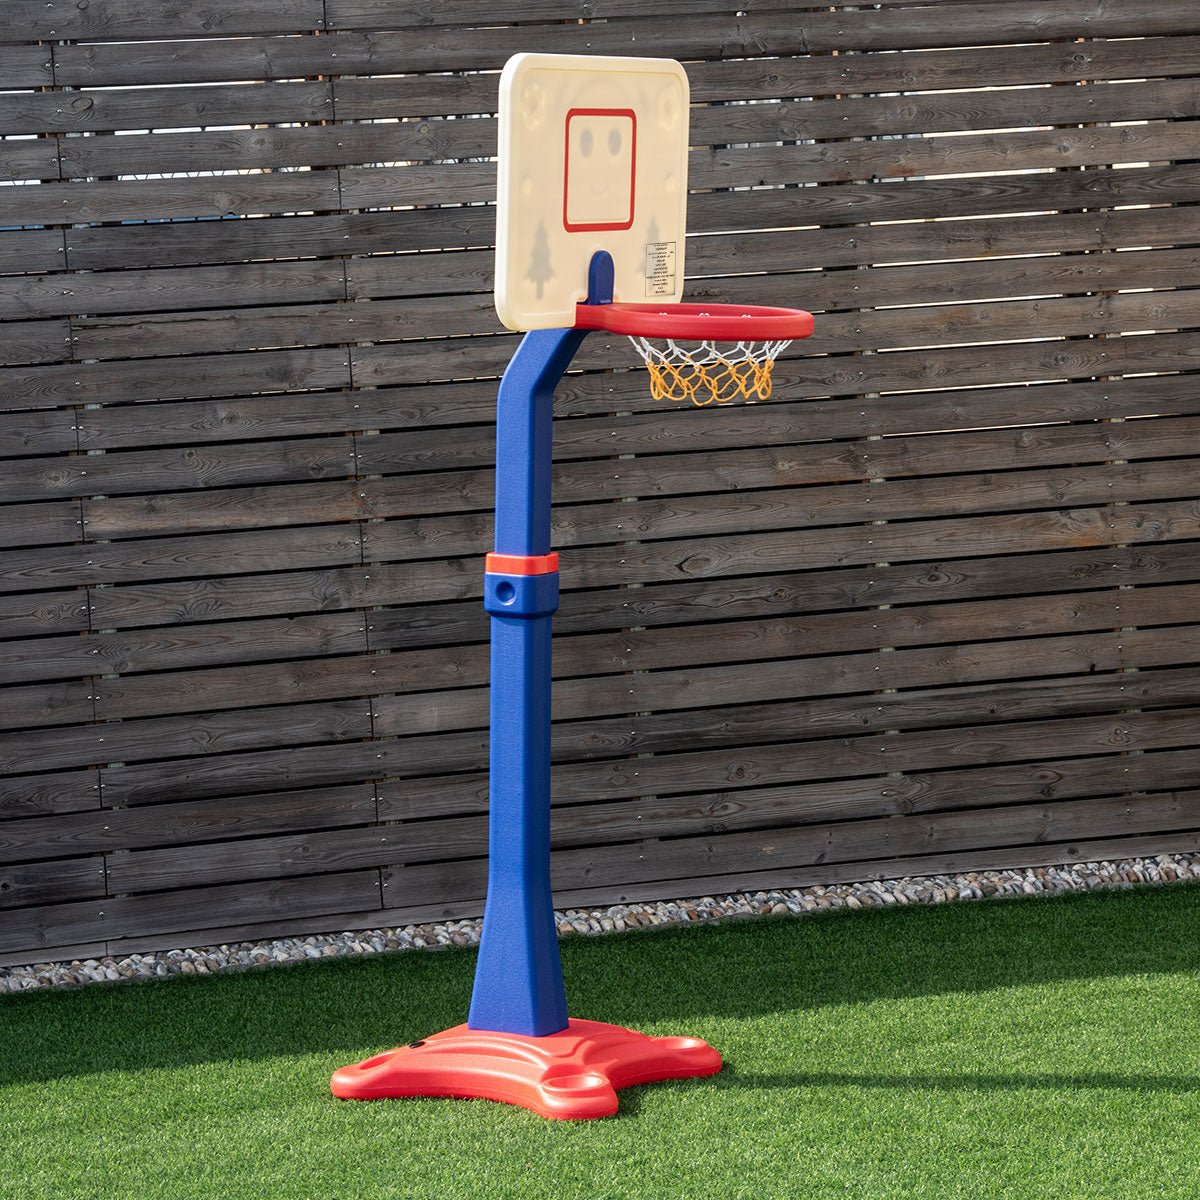 Little Ballers: Height Adjustable Toddler Basketball Hoop Stand Set for Active Kids